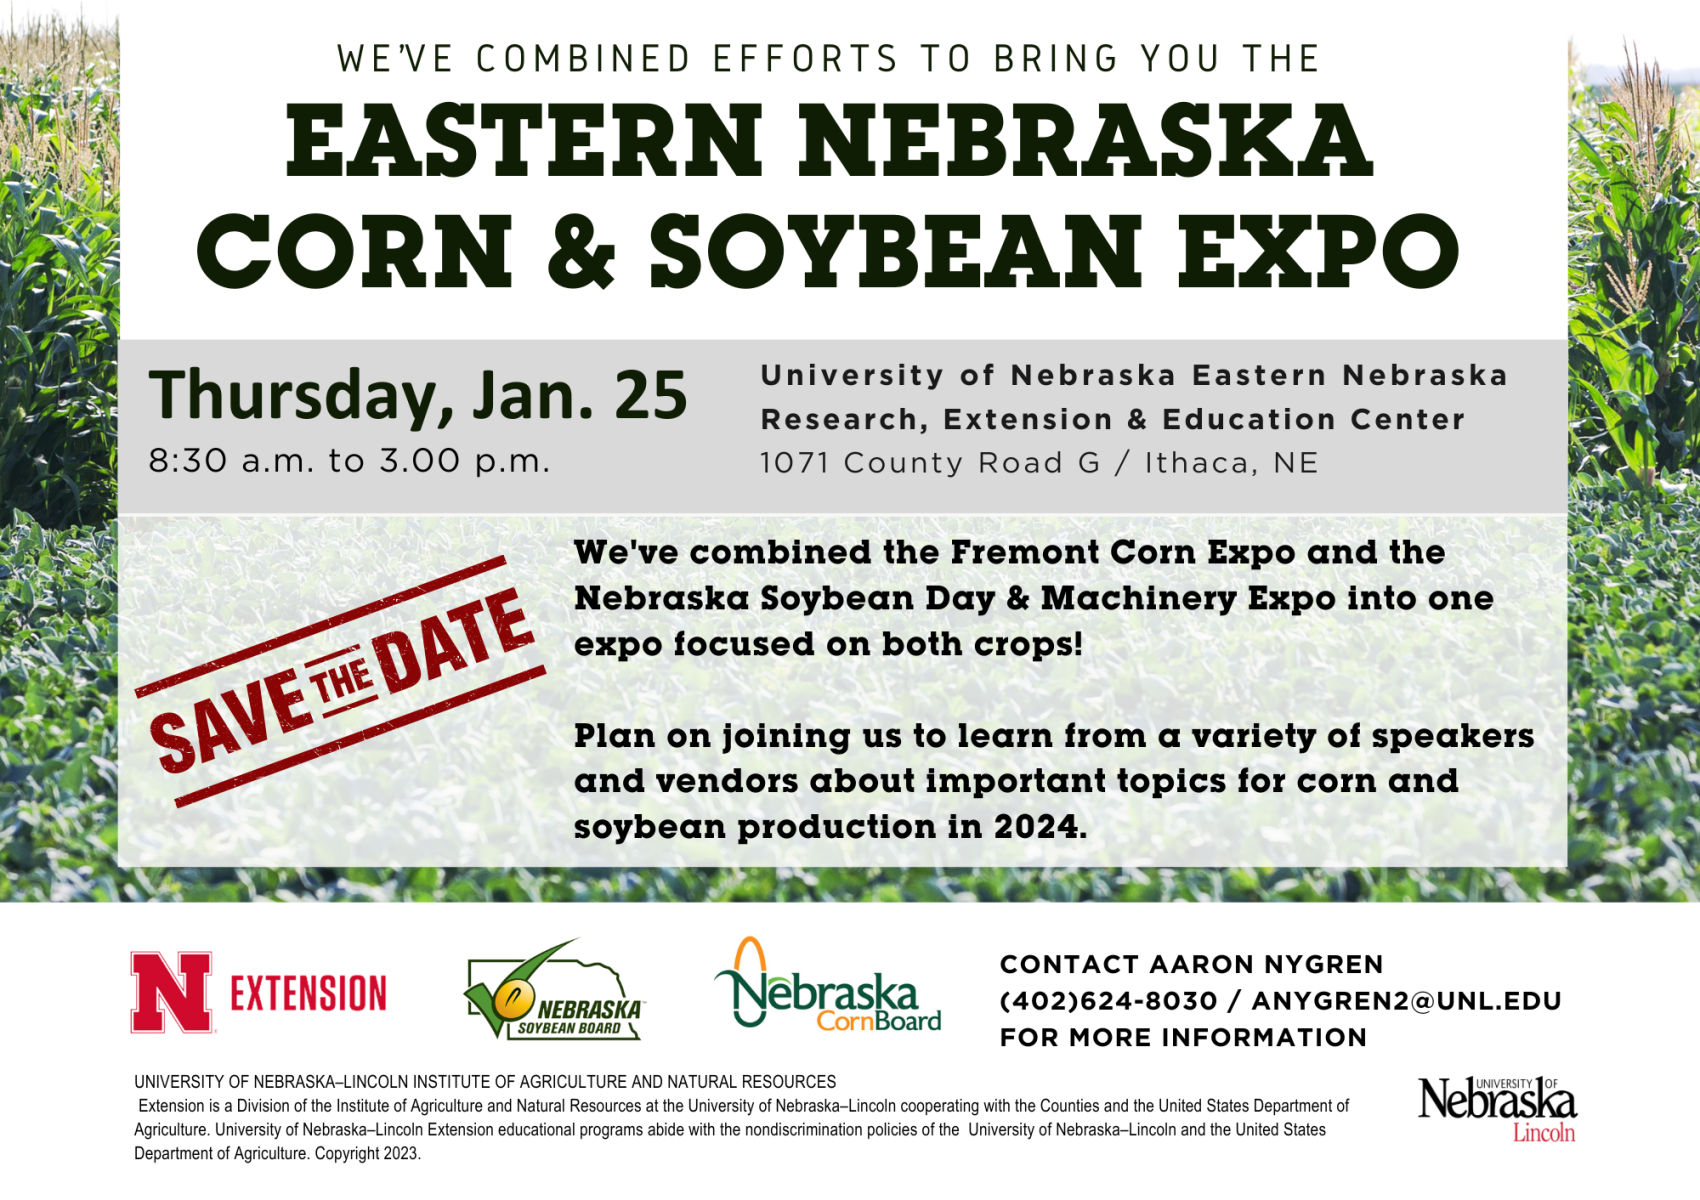 Save the Date - Eastern Nebraska Corn & Soybean Expo